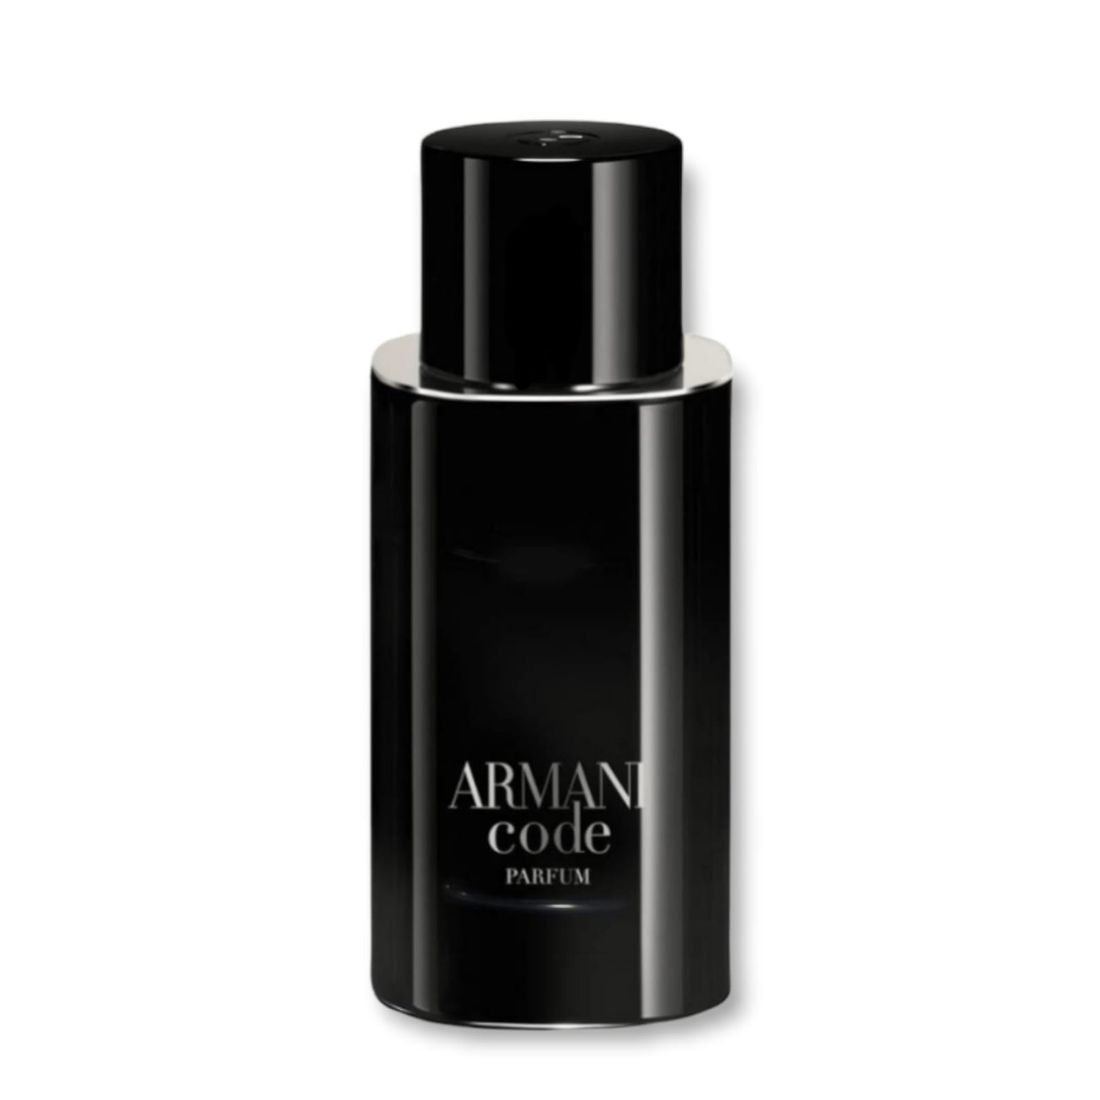 giorgio armani armani code parfum ekstrakt perfum 125 ml   